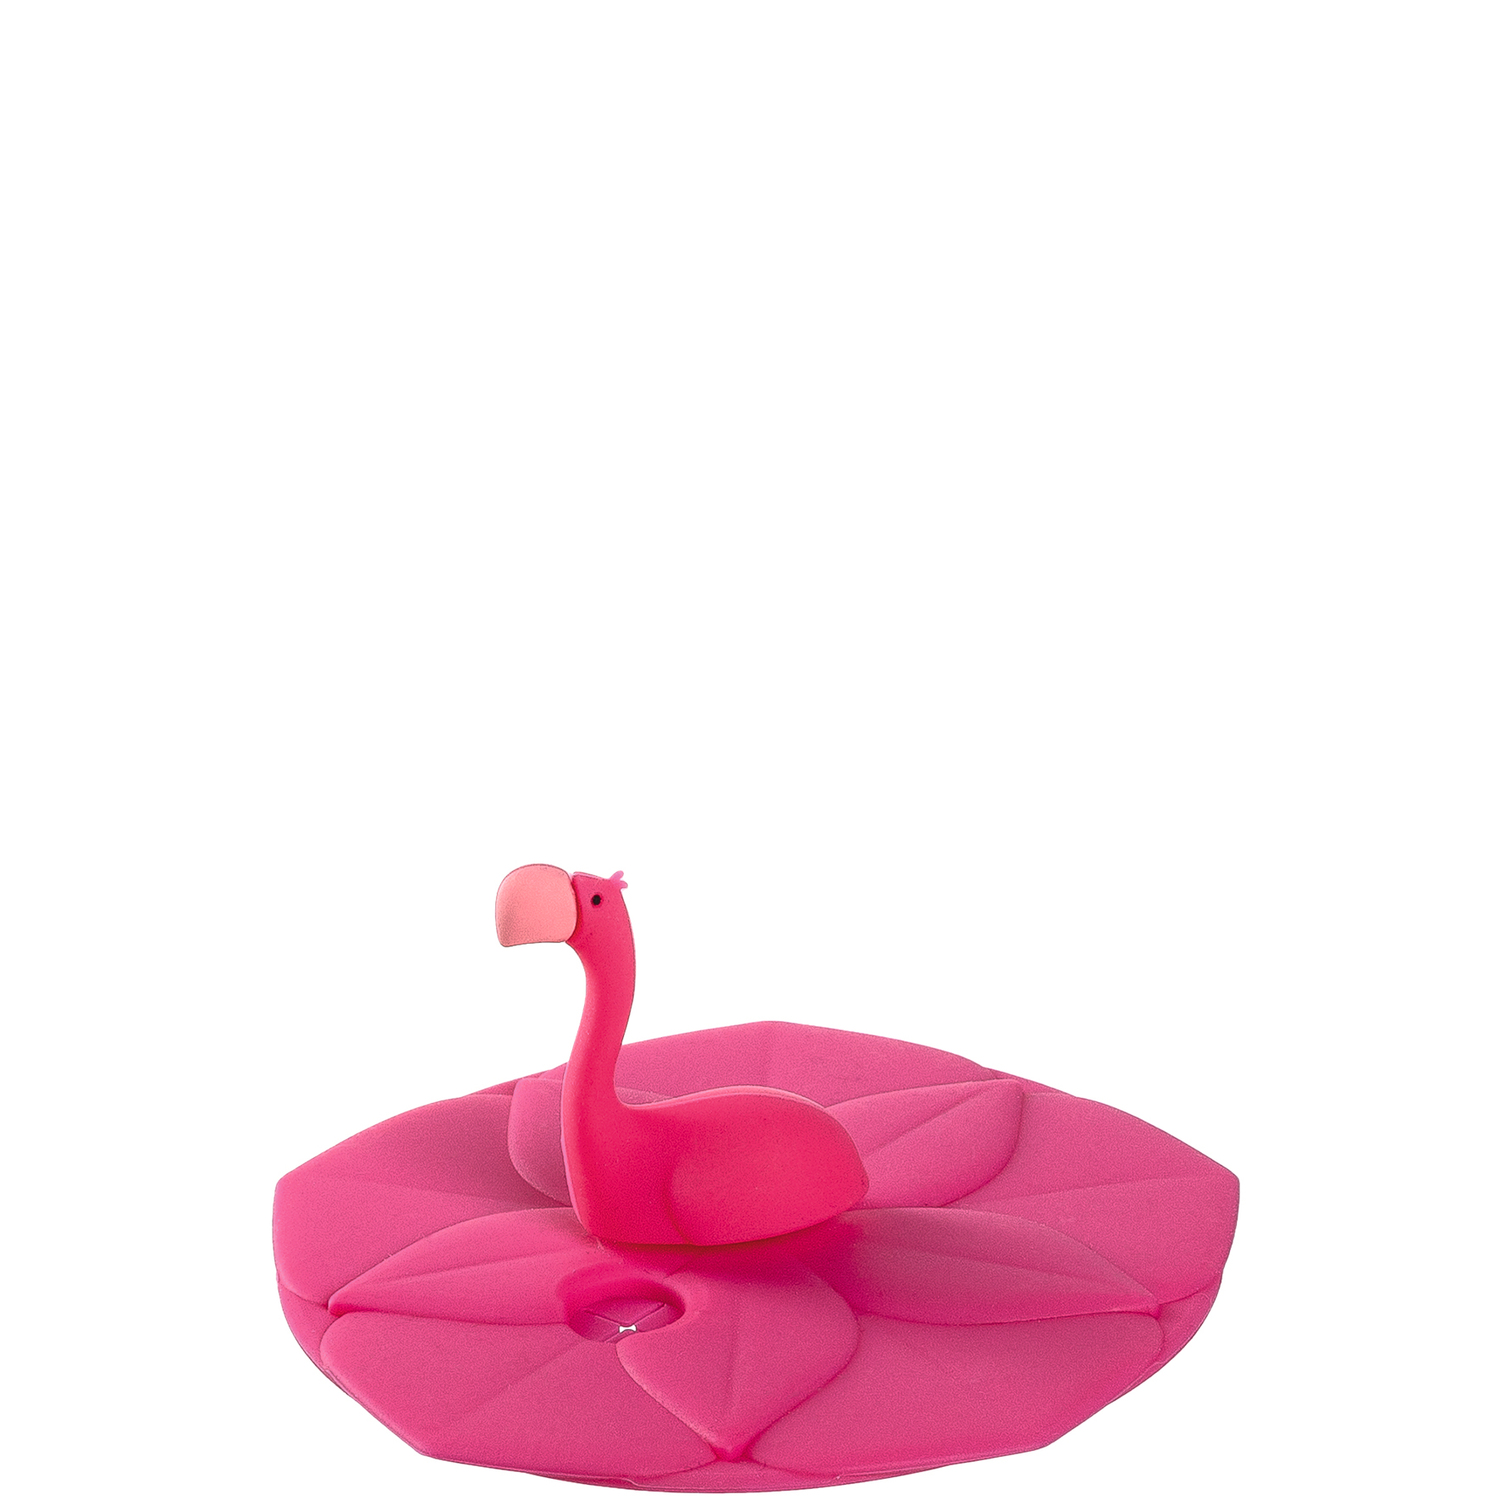 GLASKOCH - Deckel Bambini pink, Flamingo  